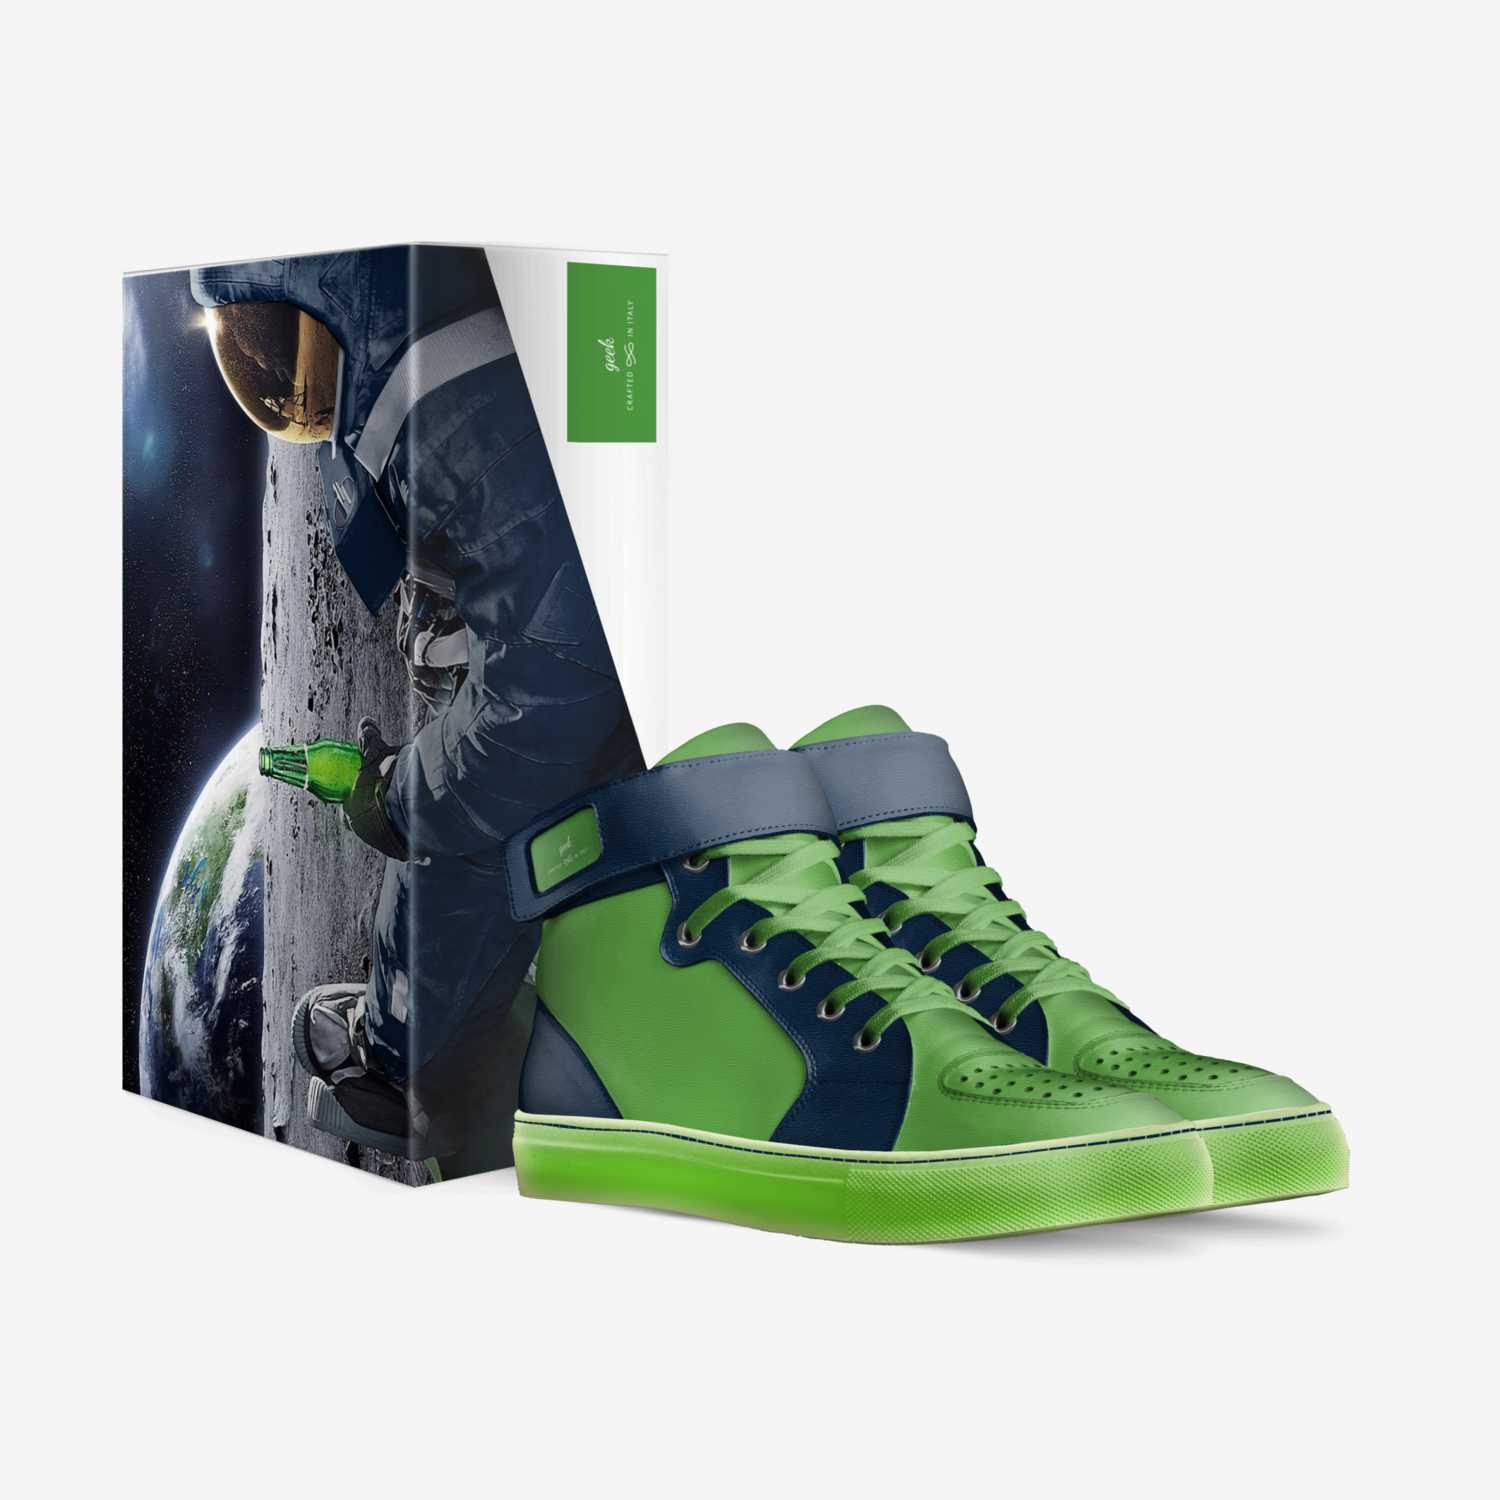 geek custom made in Italy shoes by Moffatt Gordon | Box view